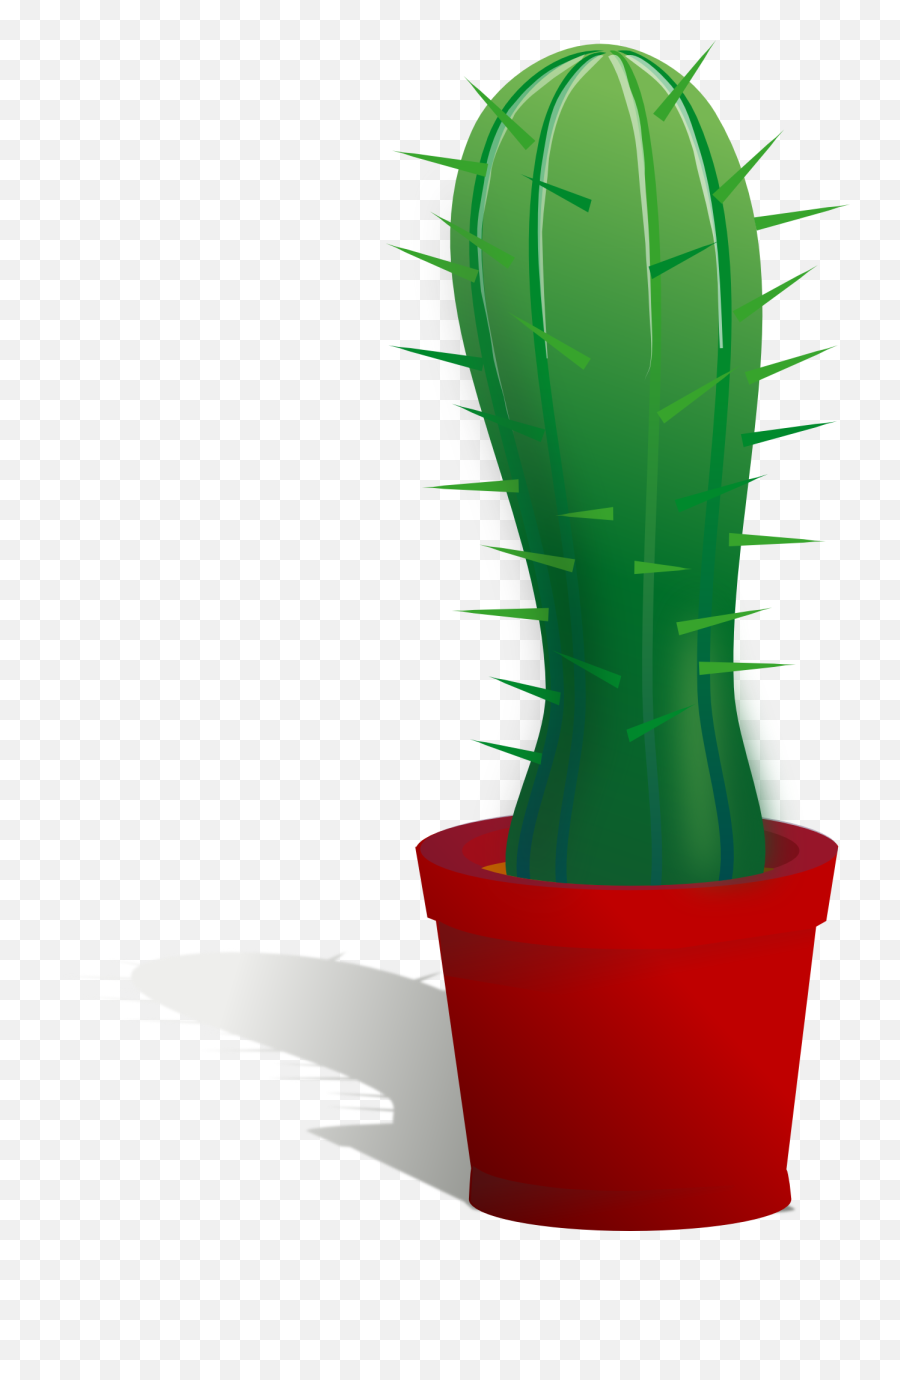 Cactus Vector Free Download Clip Art - Cactus Clipart Png Transparente,Cactus Clipart Png